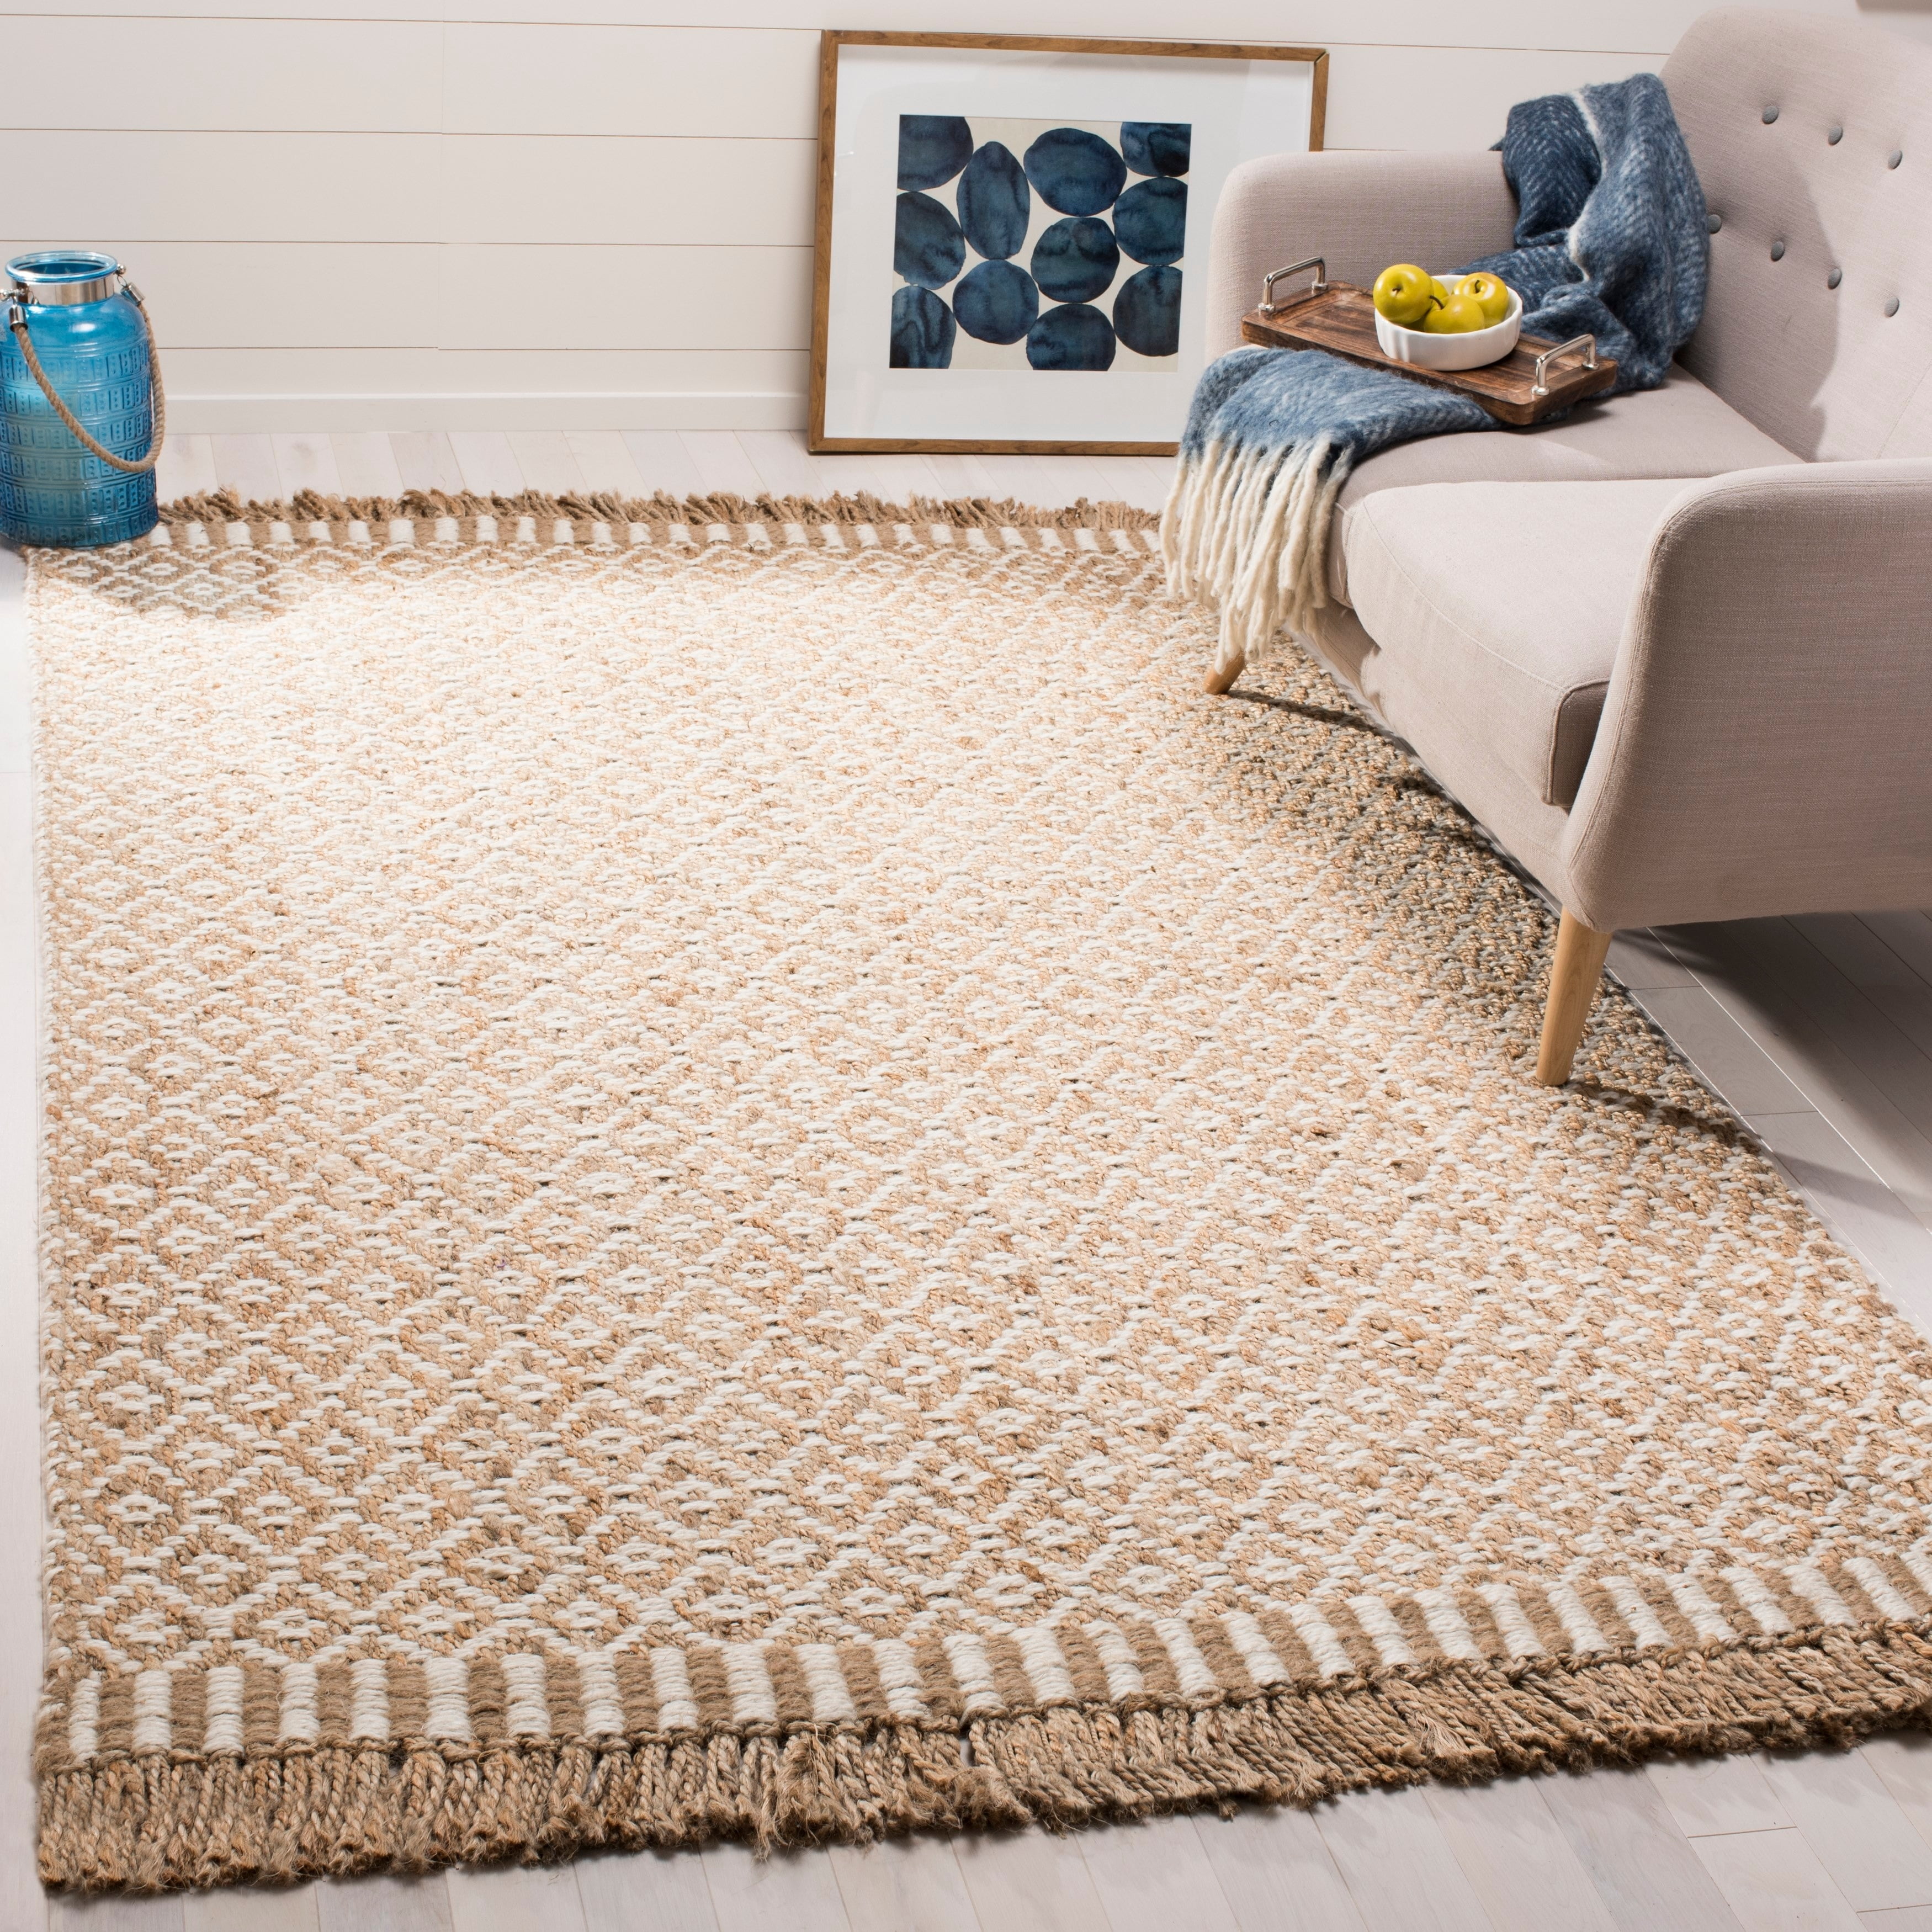 Safavieh Hand woven Natural Carpet Fiber Jute Area Rug Decor Texture 6'x9' NEW 